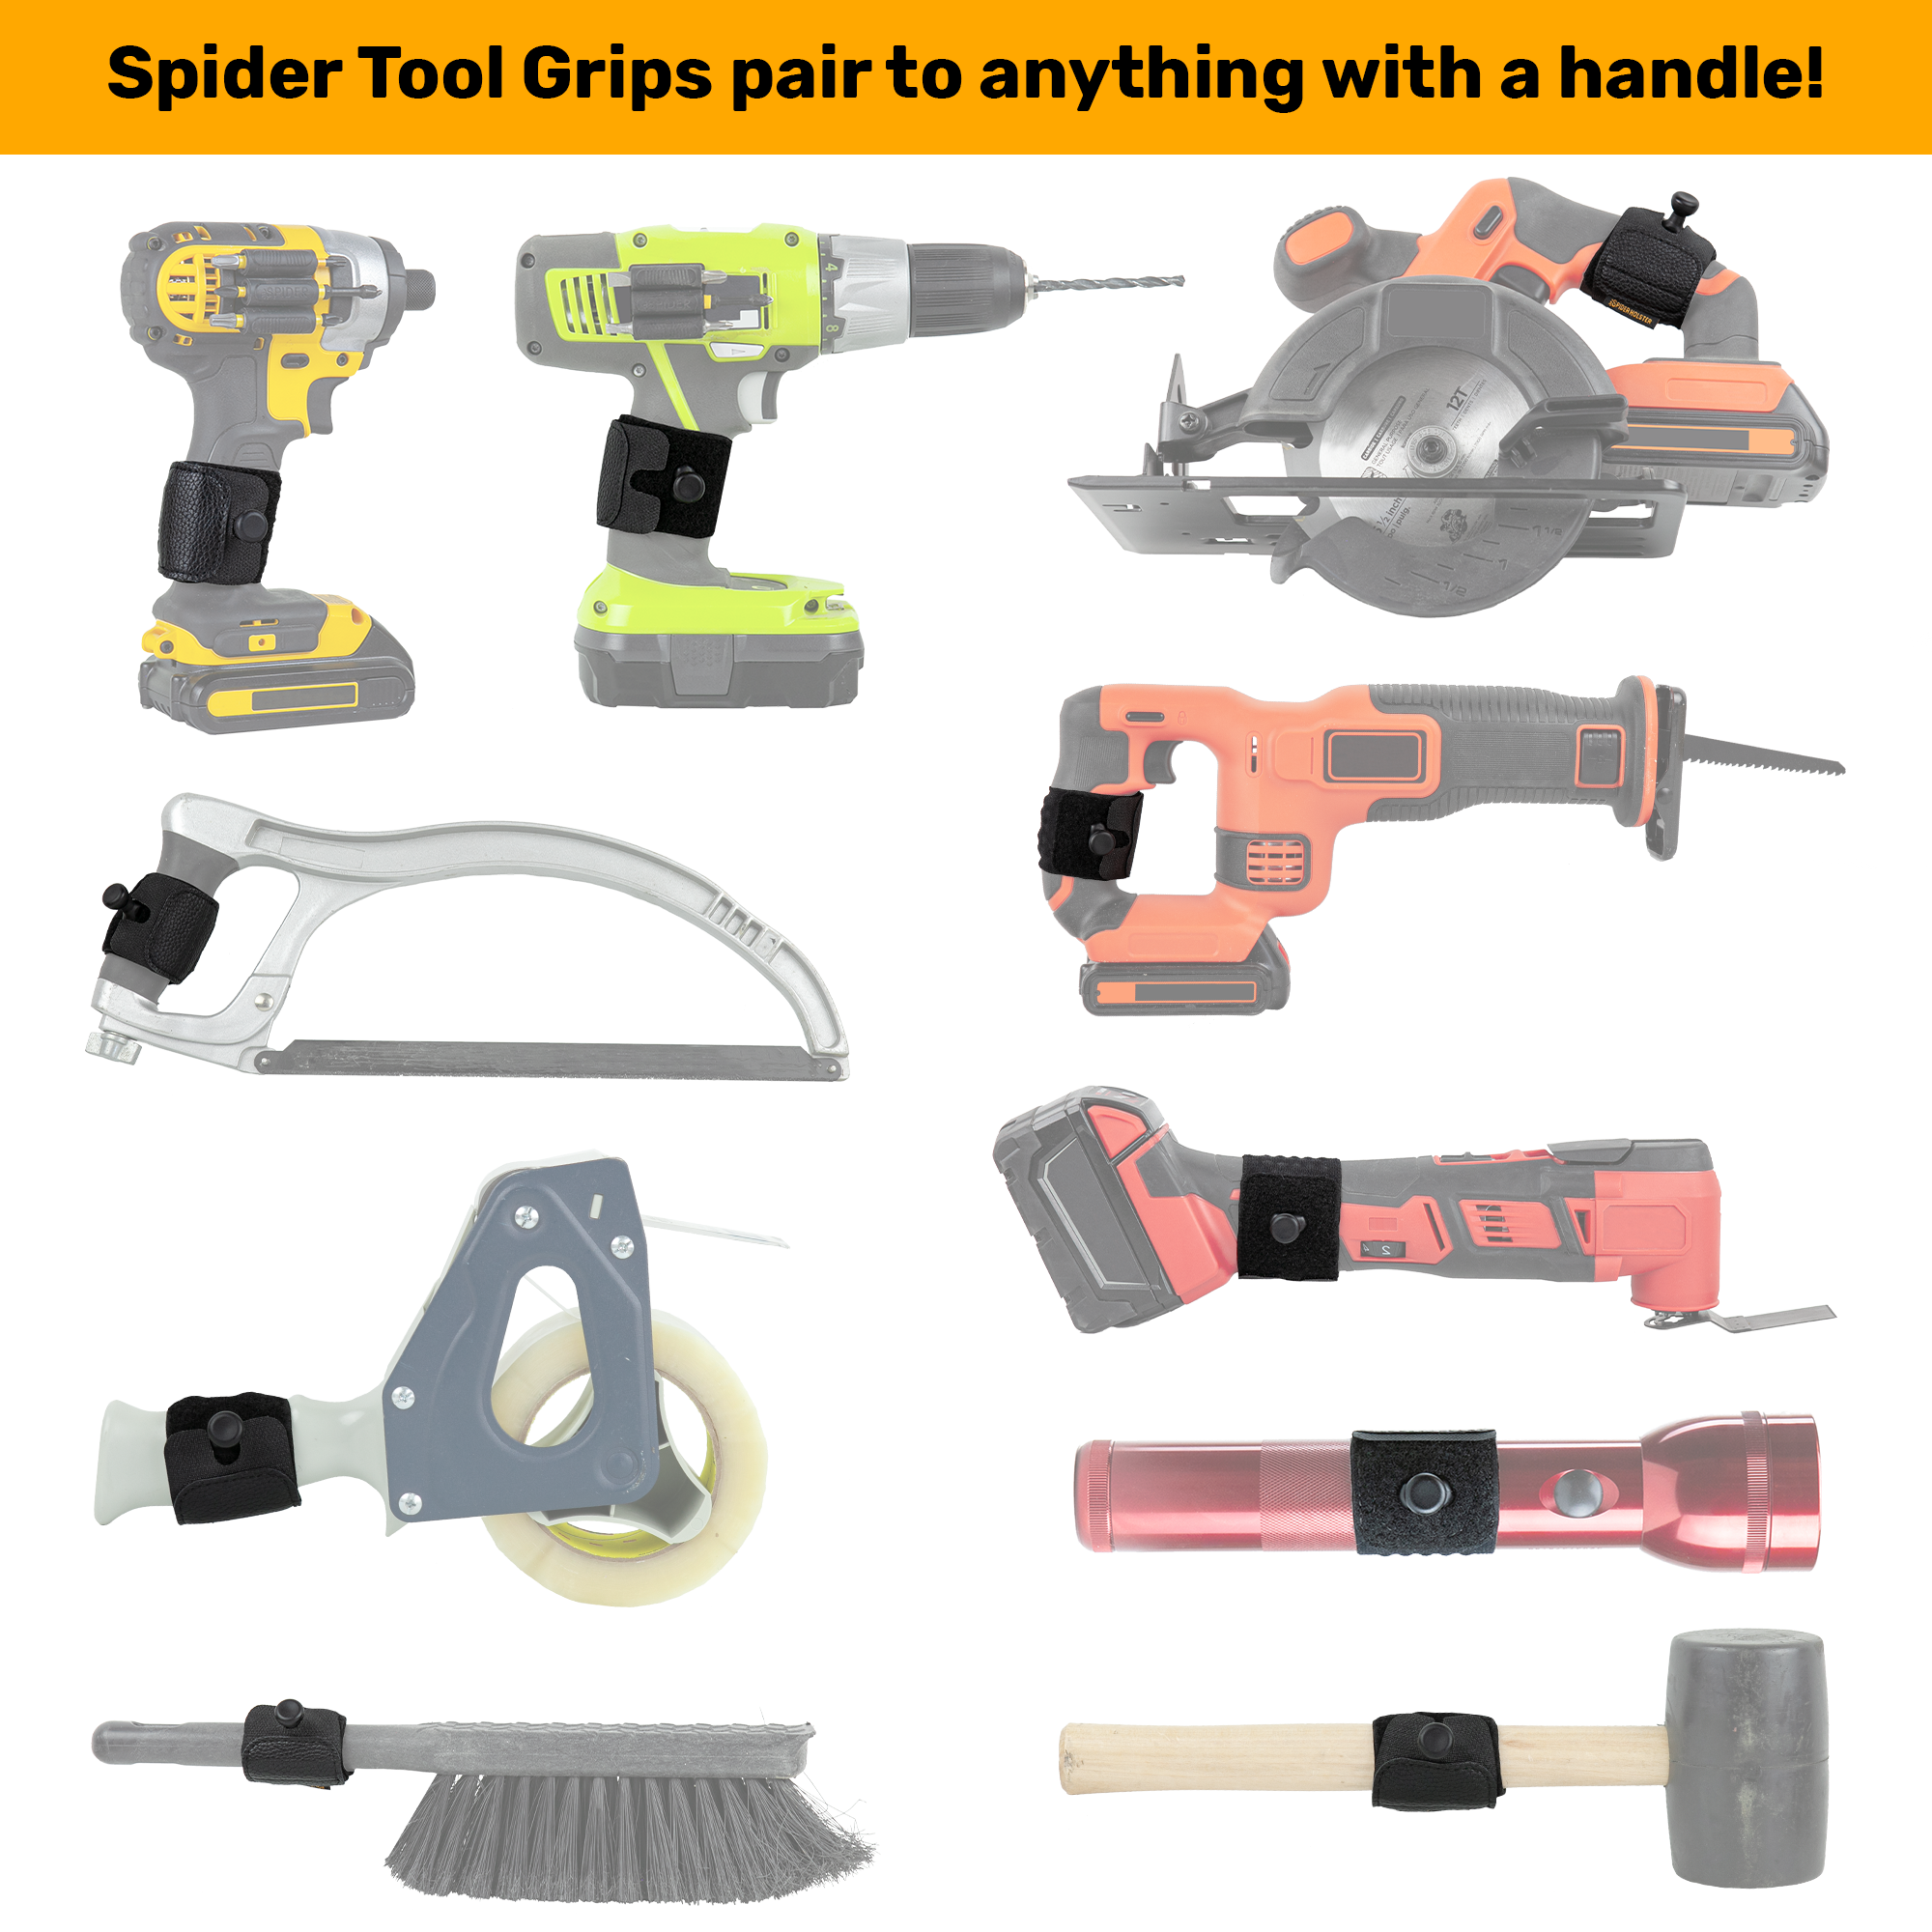 5030TH: Dual Tool Kit - 5 Piece Kit